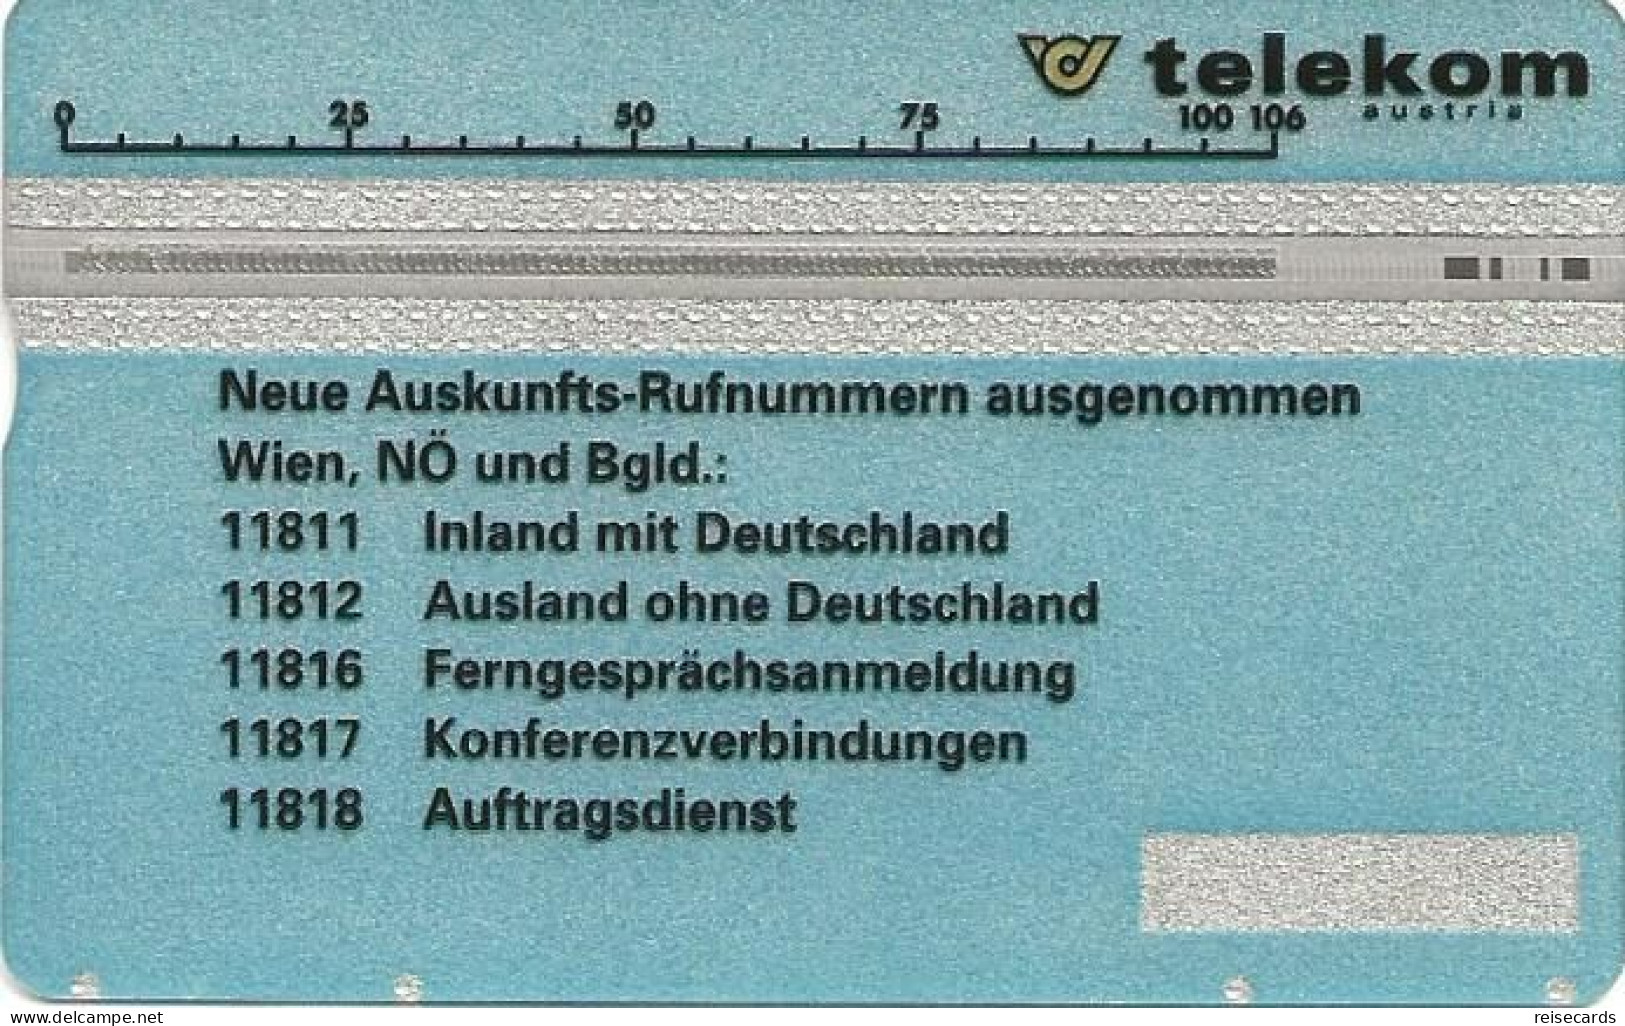 Austria: Telekom Austria 901A Auskunfts-Rufnummern - Austria